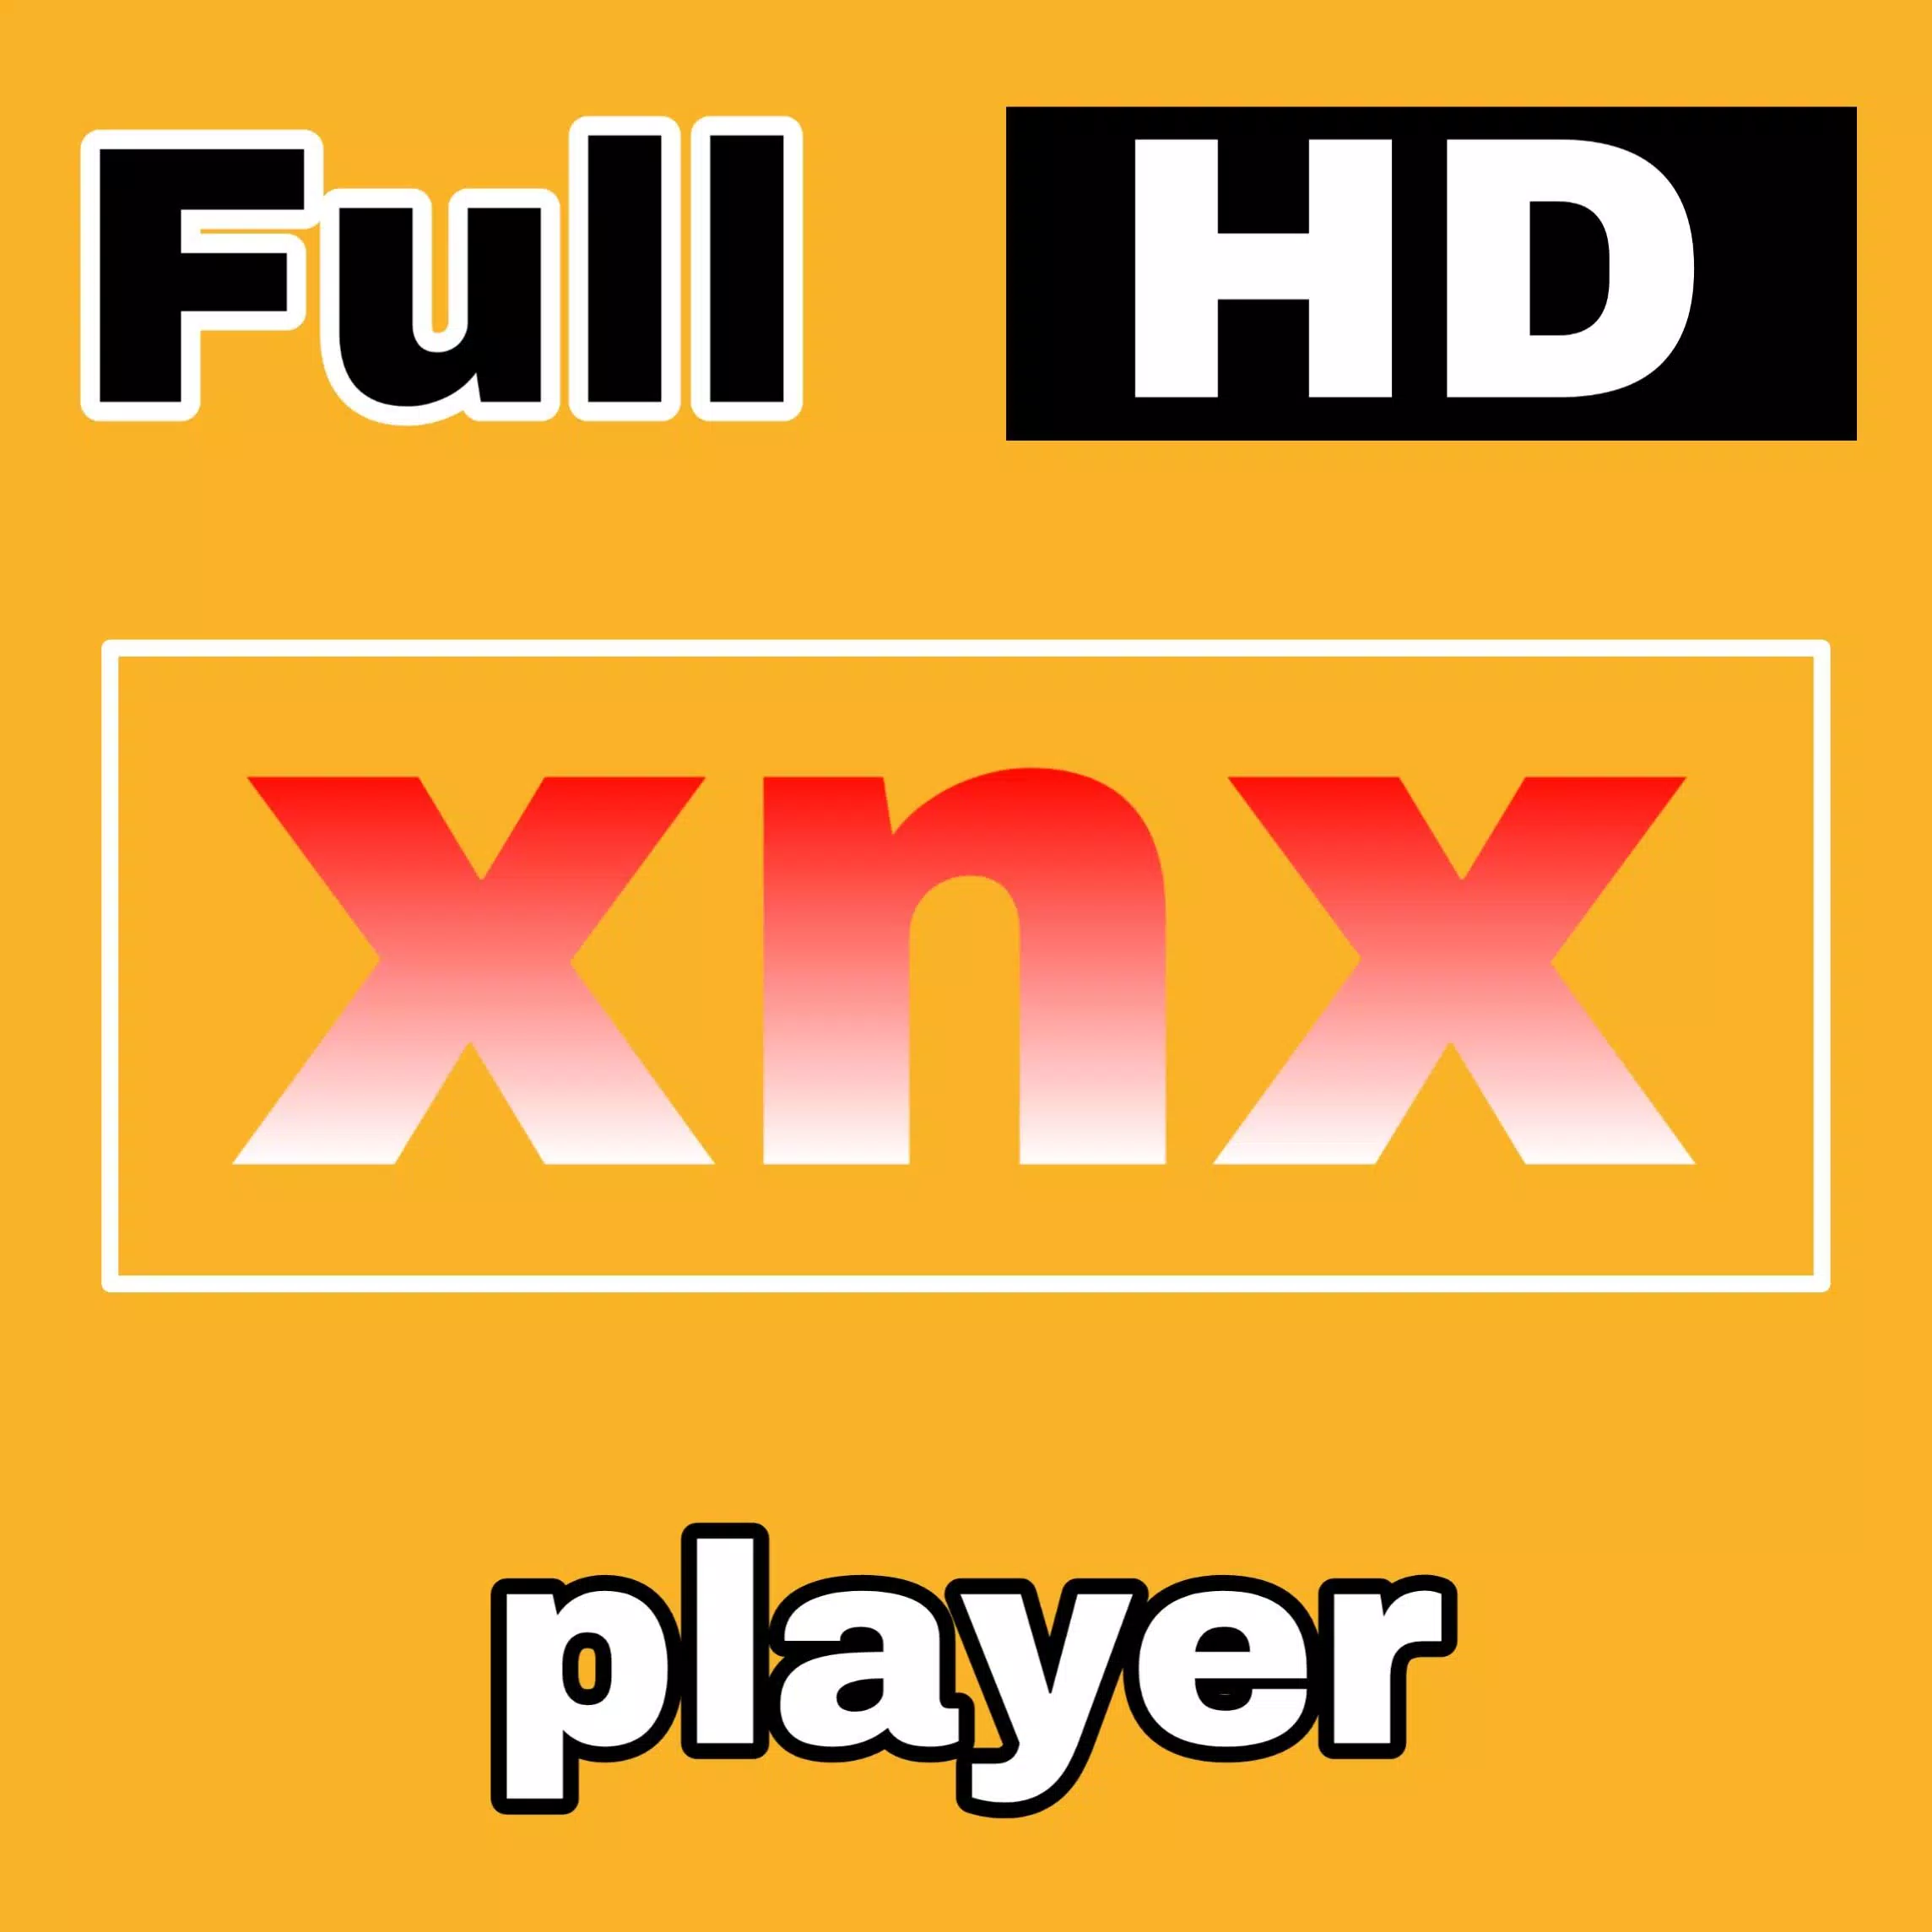 xnx player full hd video xnx player-hd video brown安卓版应用APK下载 image